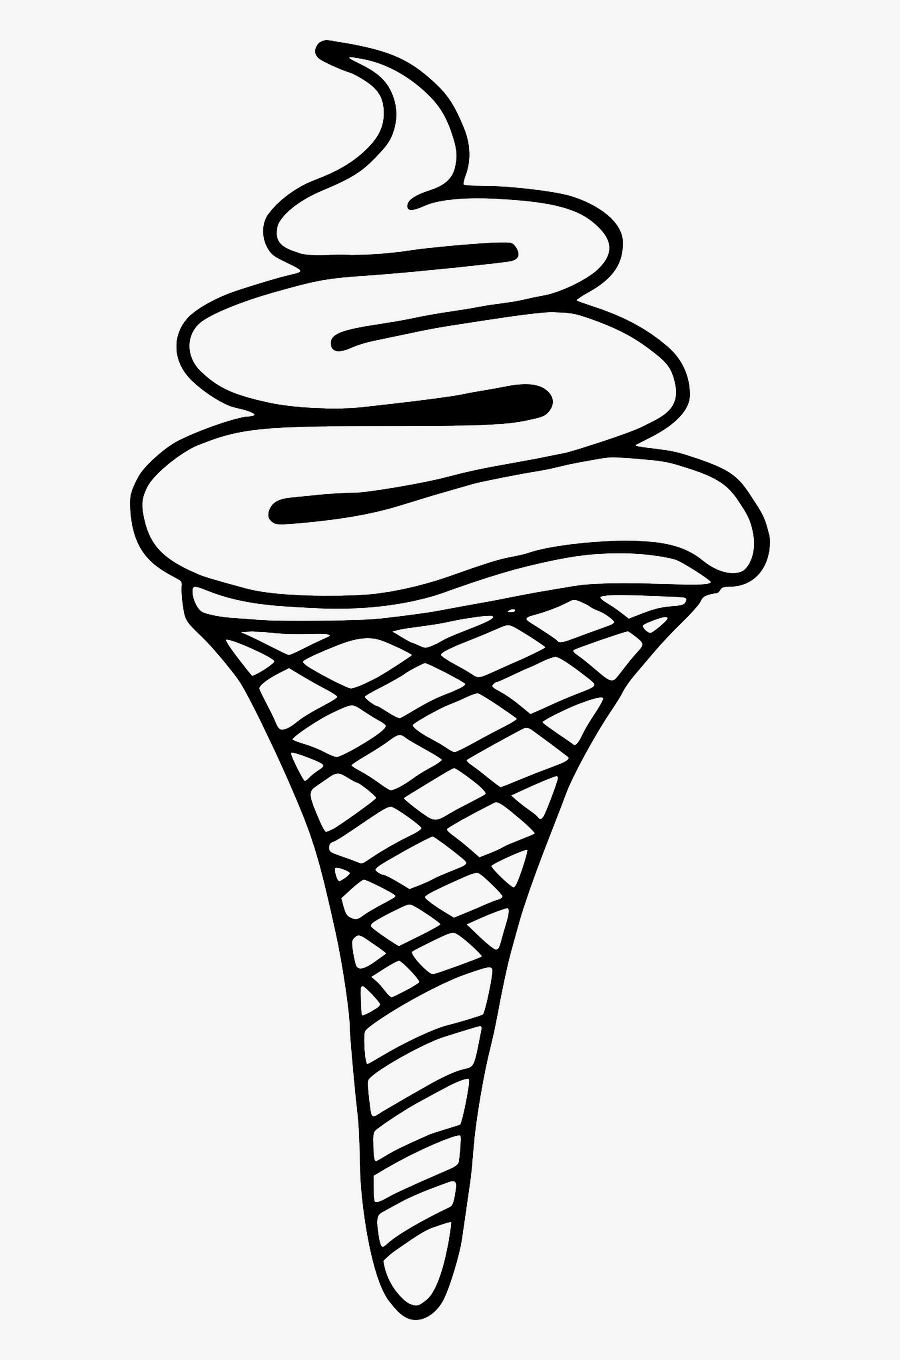 Soft Serve Ice Cream Cone Dairy Free Picture - Ice Cream Pops Clipart Black And White, Transparent Clipart